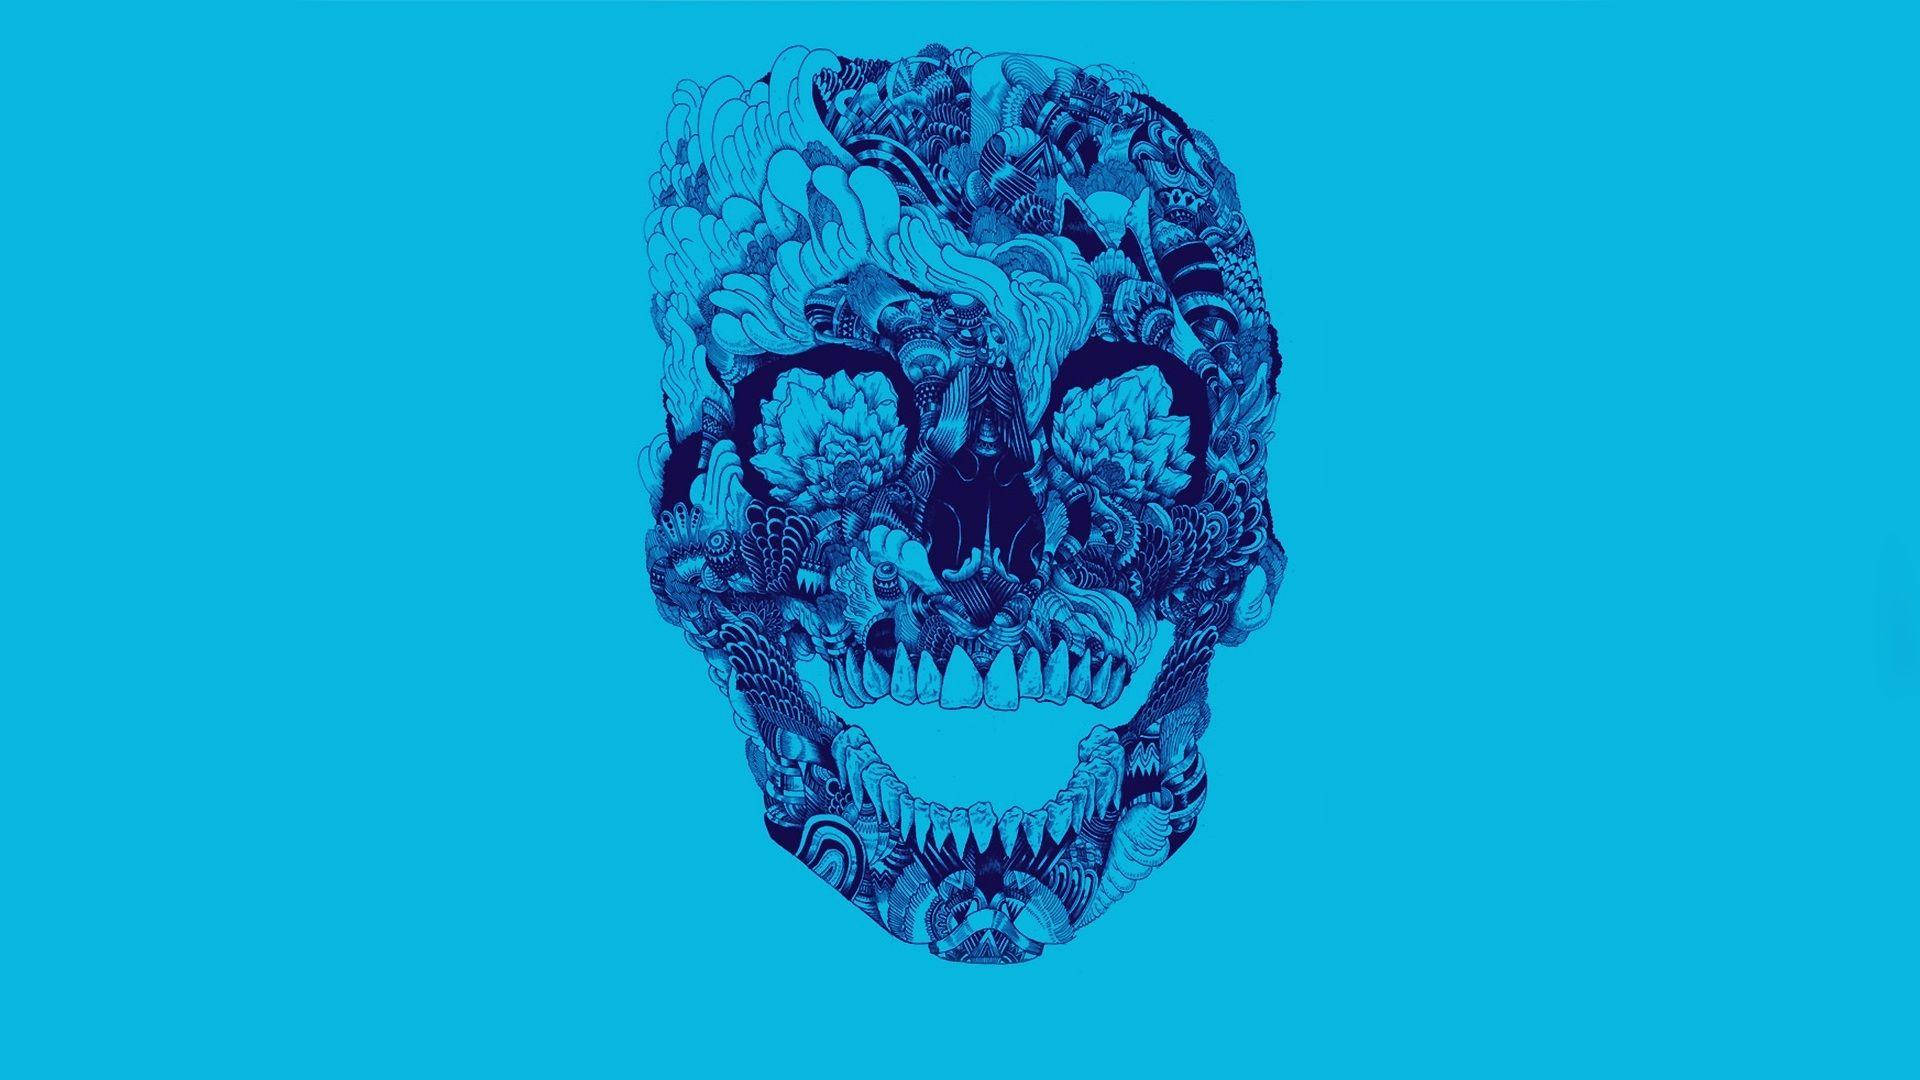 Aesthetic Day Of The Dead Skull In Blue